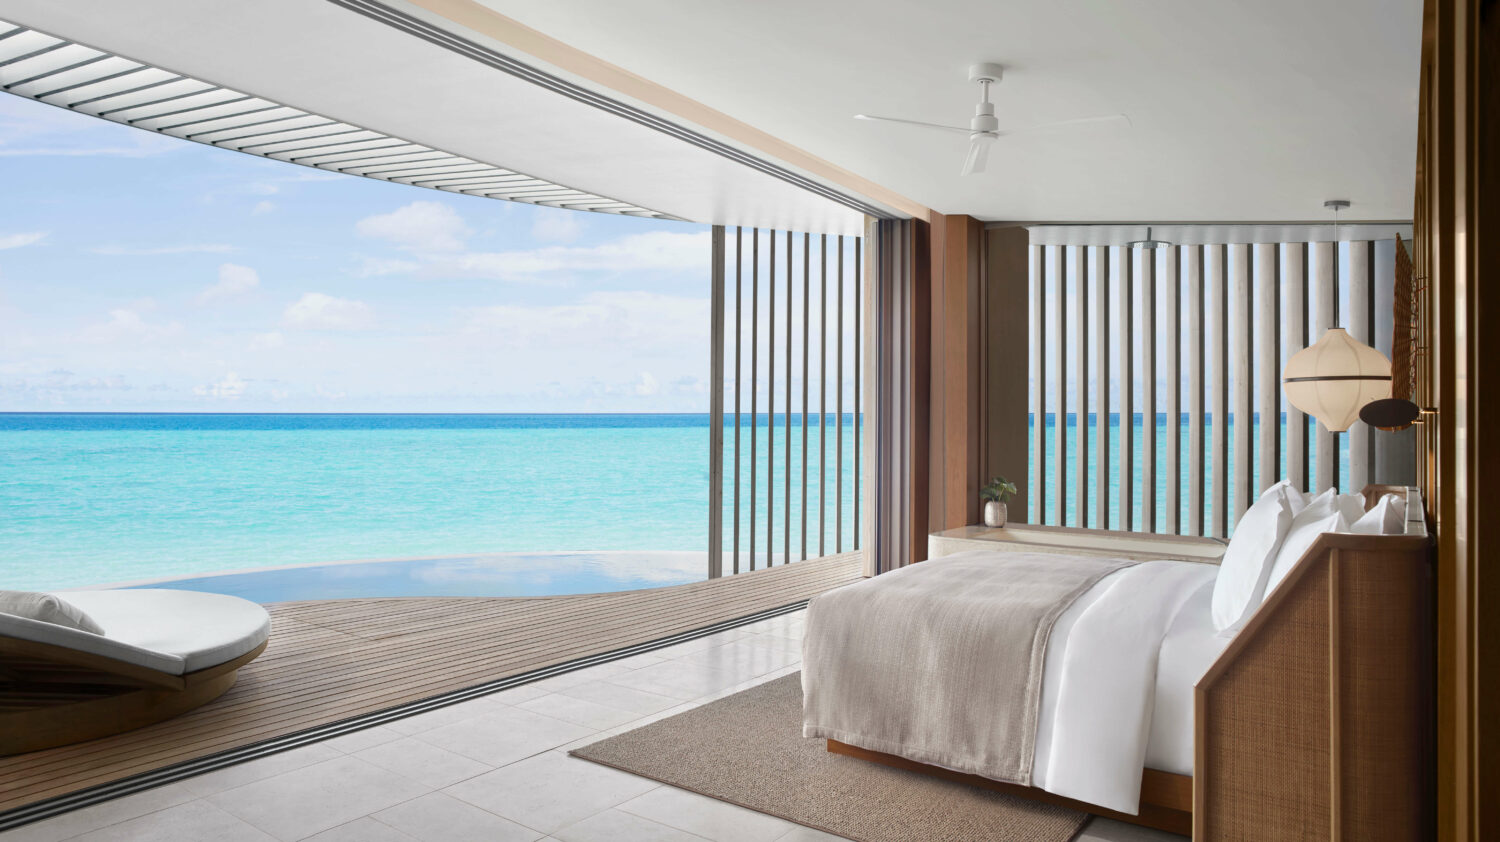 The Ritz-Carlton Maldives, Fari Islands - Ocean Pool Villa - Bedroom 2